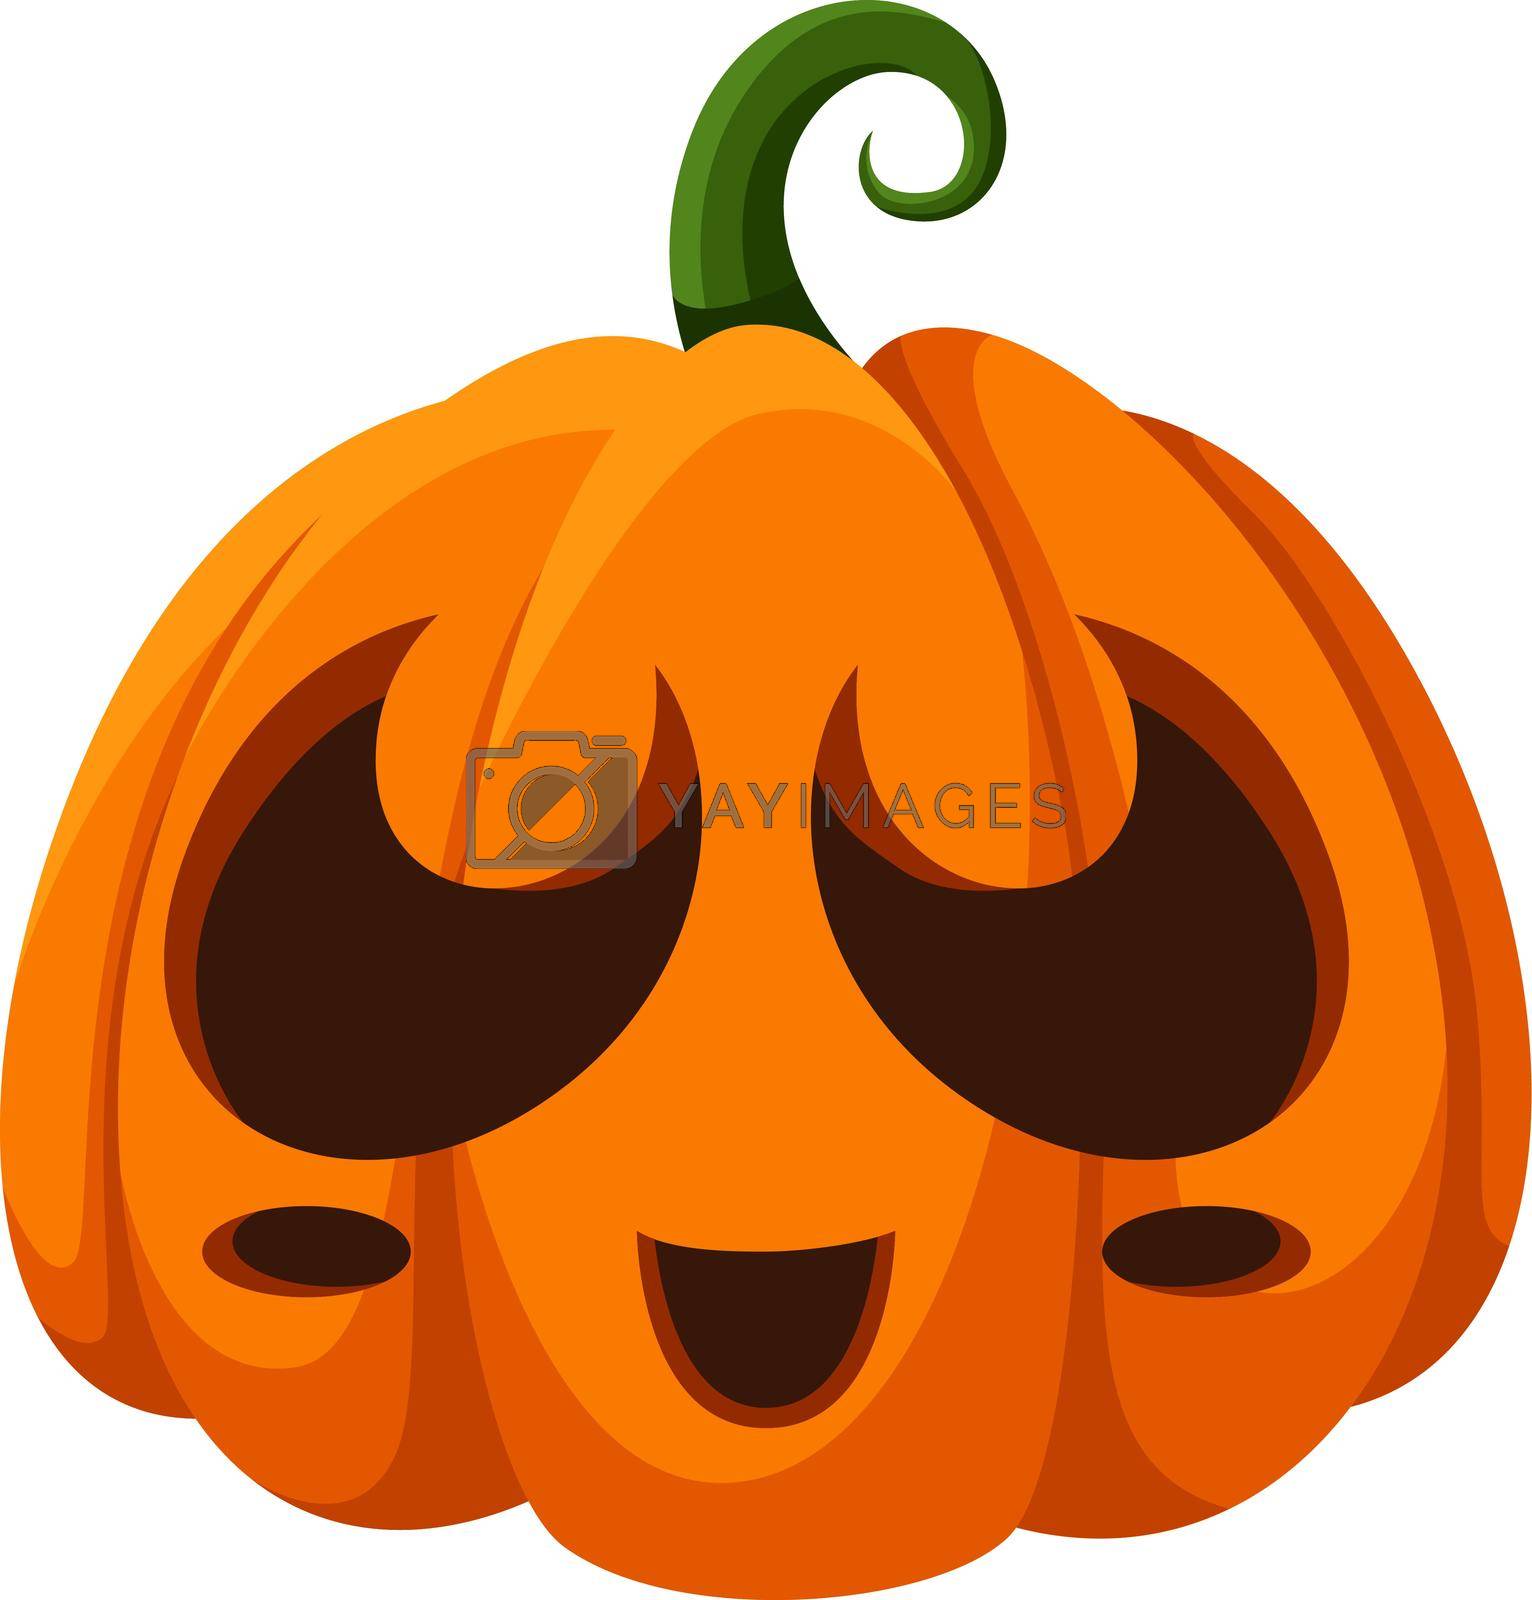 Cute pumpkin face. Autumn celebration icon. Halloween decoration isolated on white background